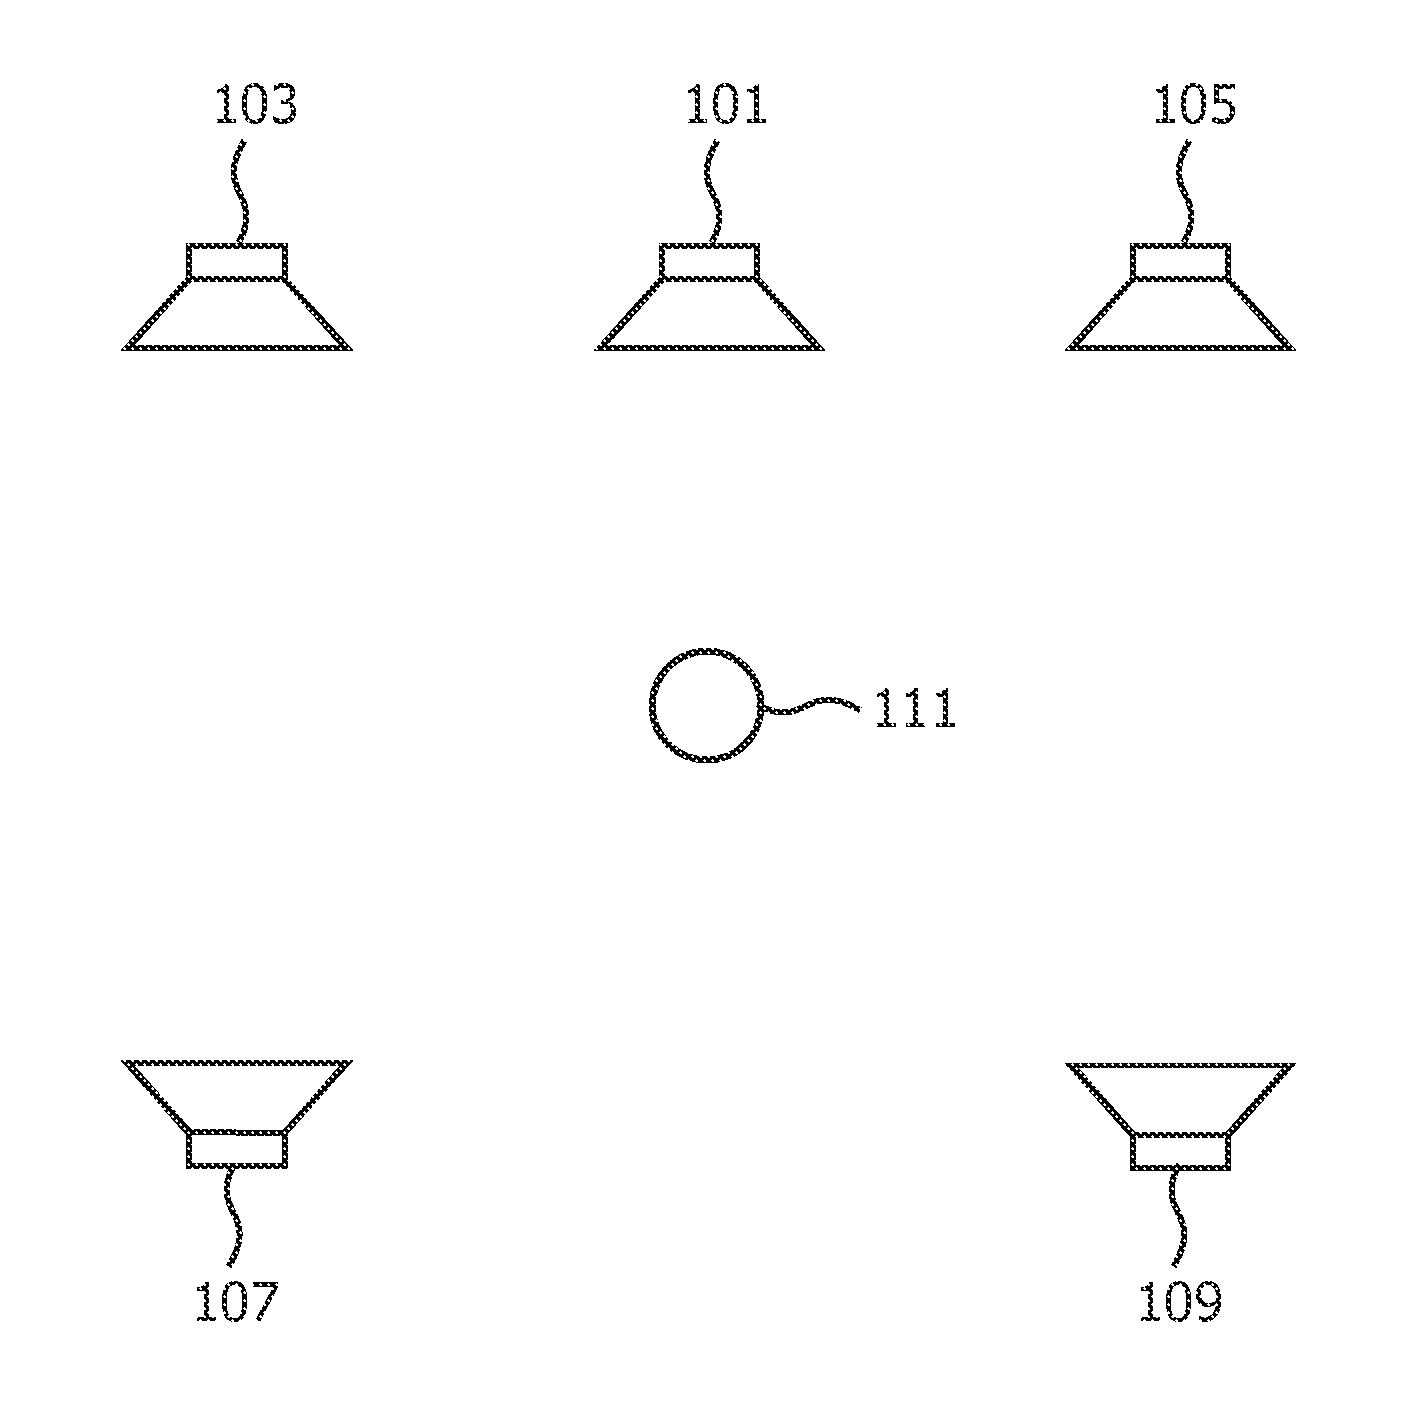 Estimation of loudspeaker positions